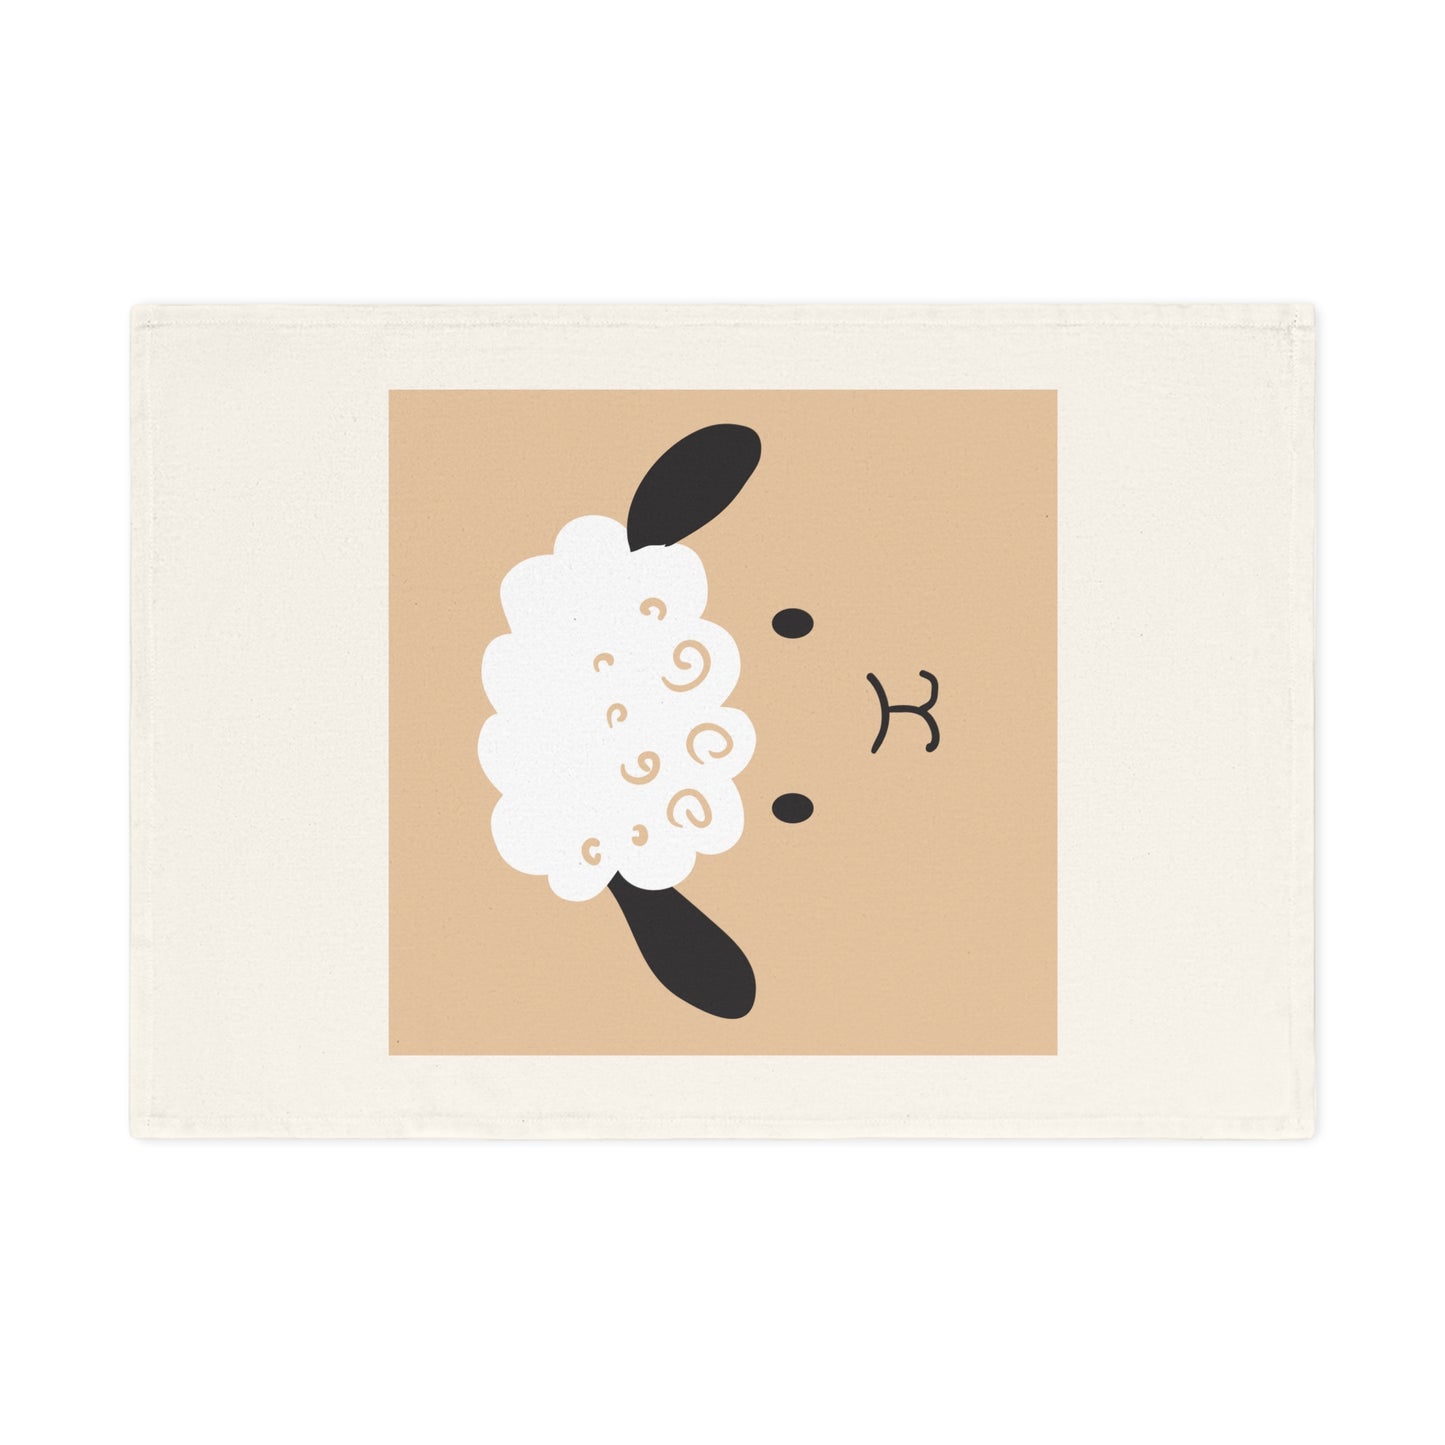 Torchon en coton biologique Sheep Relationsheep, 50 x 70 cm, torchon de cuisine écologique, torchon de salle de bain